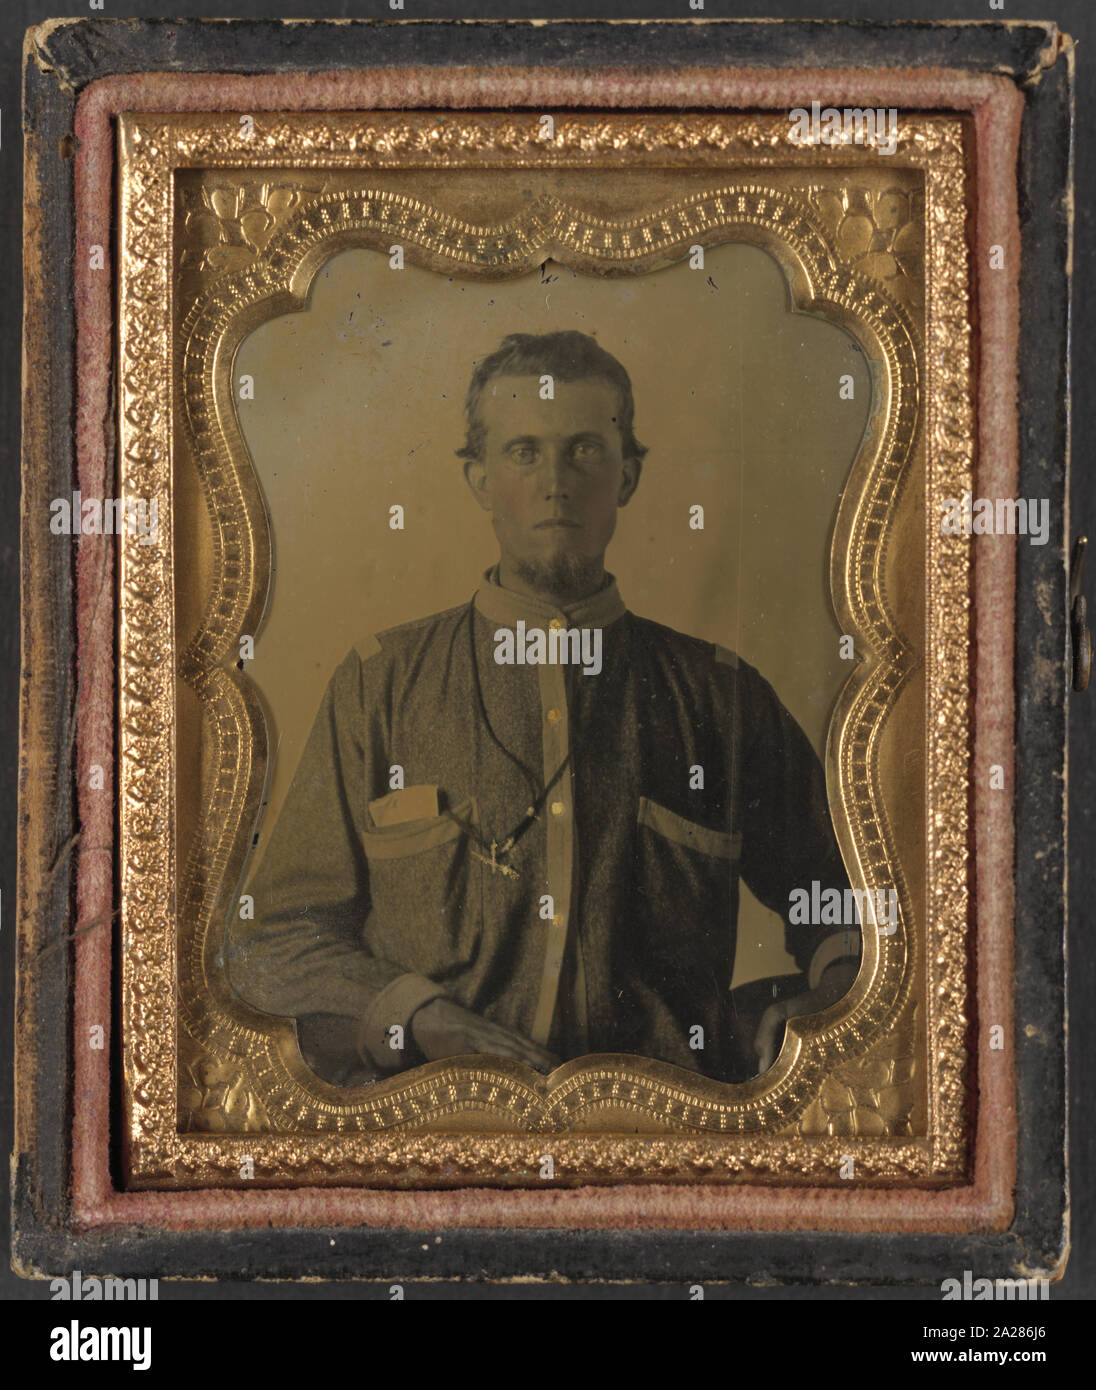 Private Reuben Goodson of Co. G, 52nd North Carolina Infantry Regiment in uniform Stock Photo